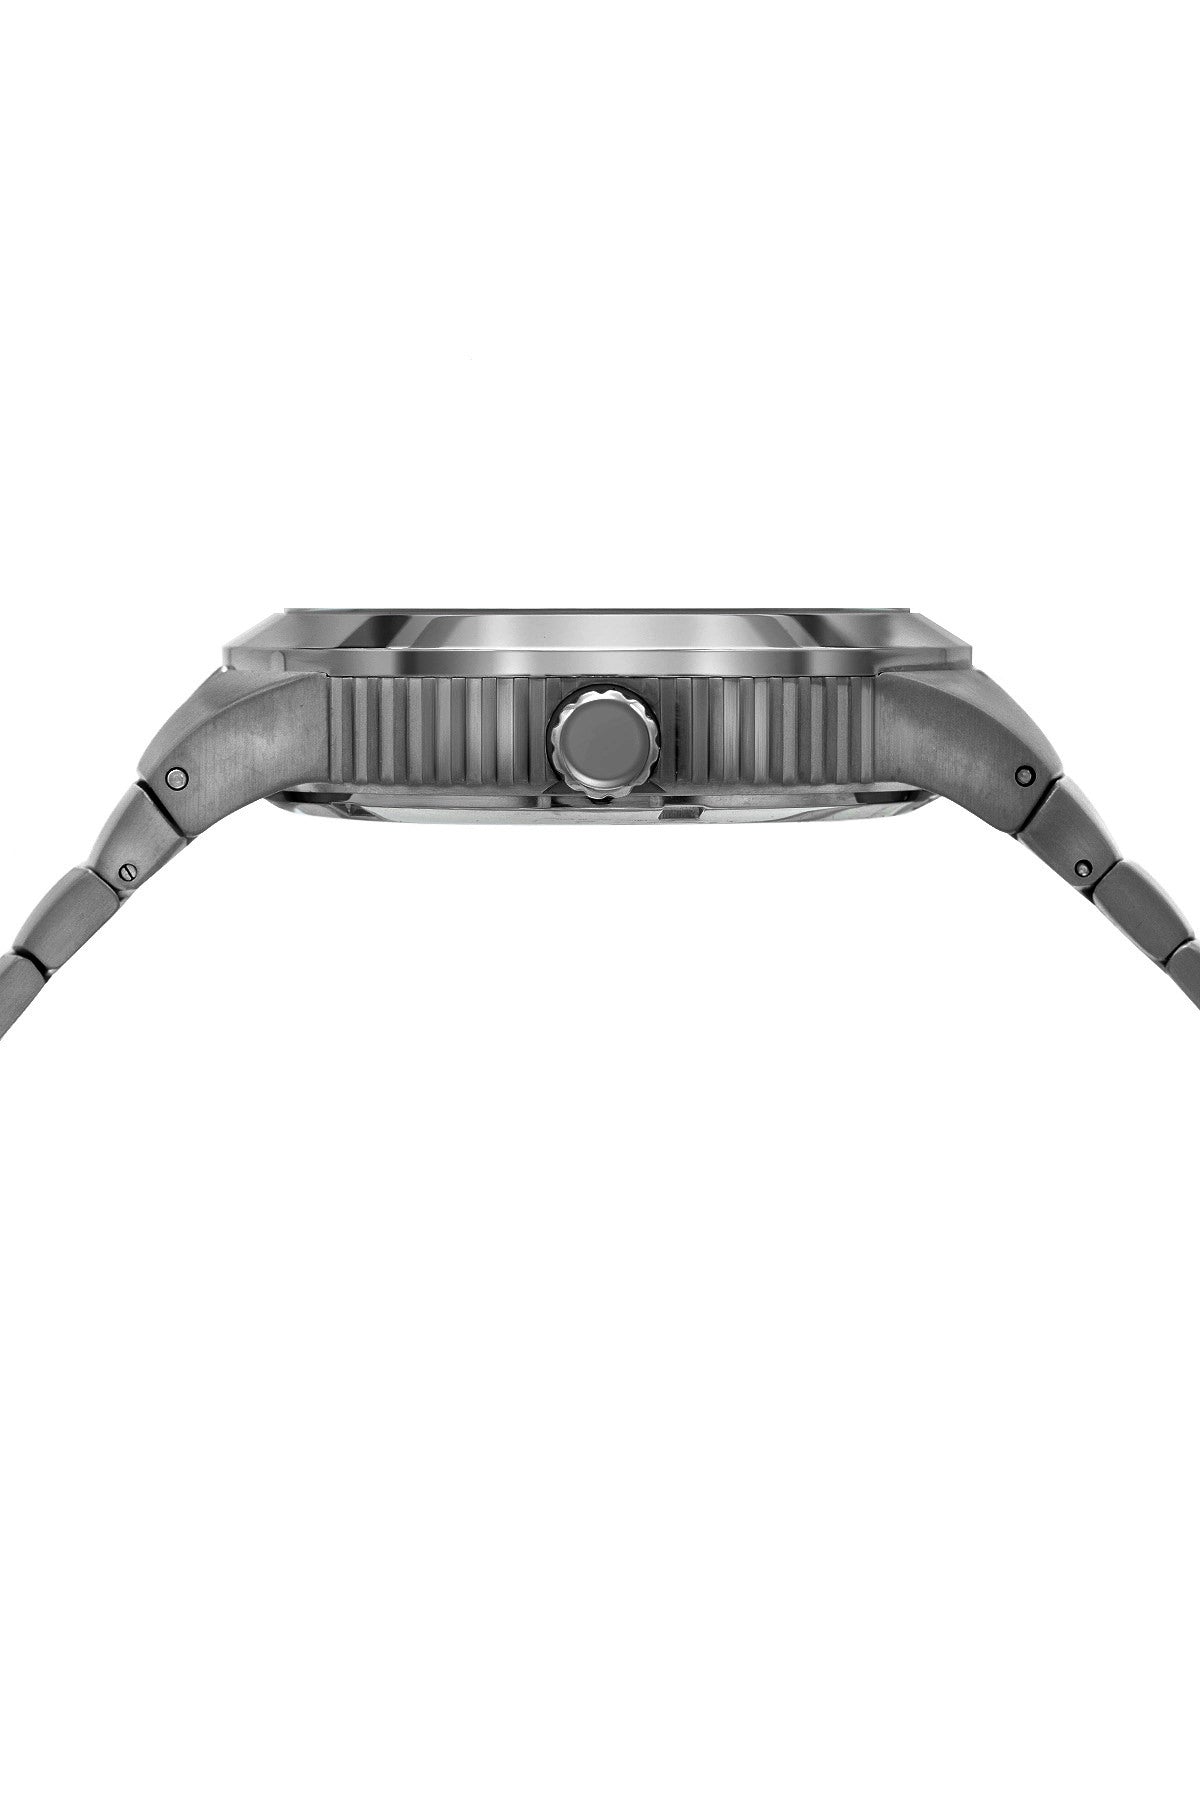 Porsamo Bleu Luca luxury men's stainless steel watch, grey, black 531FLUS